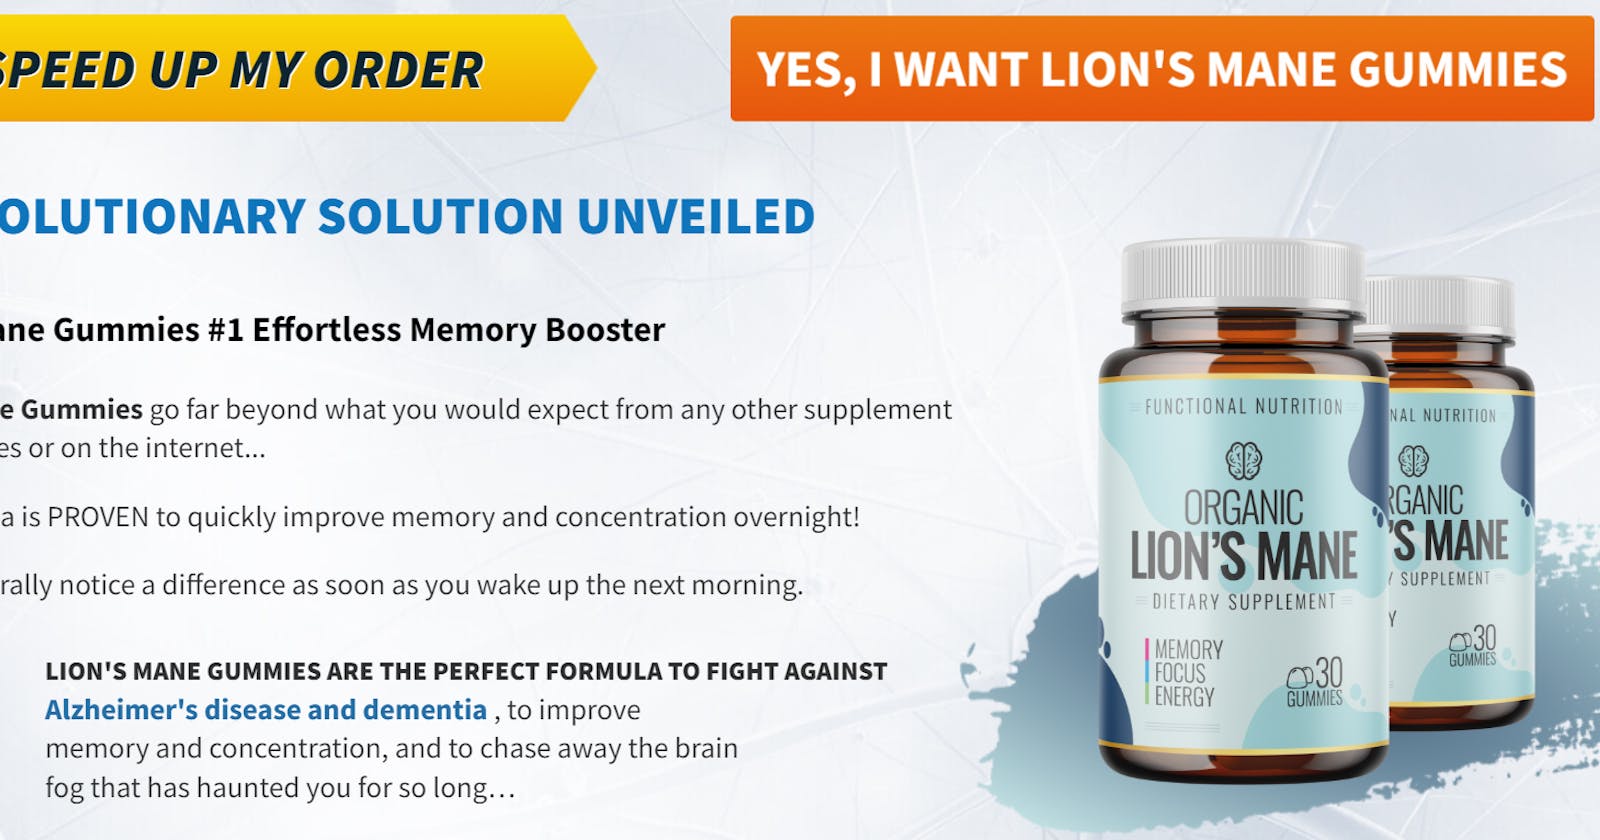 Functional Nutrition Organic Lion's Mane Ca - Brain Boosting Supplement?